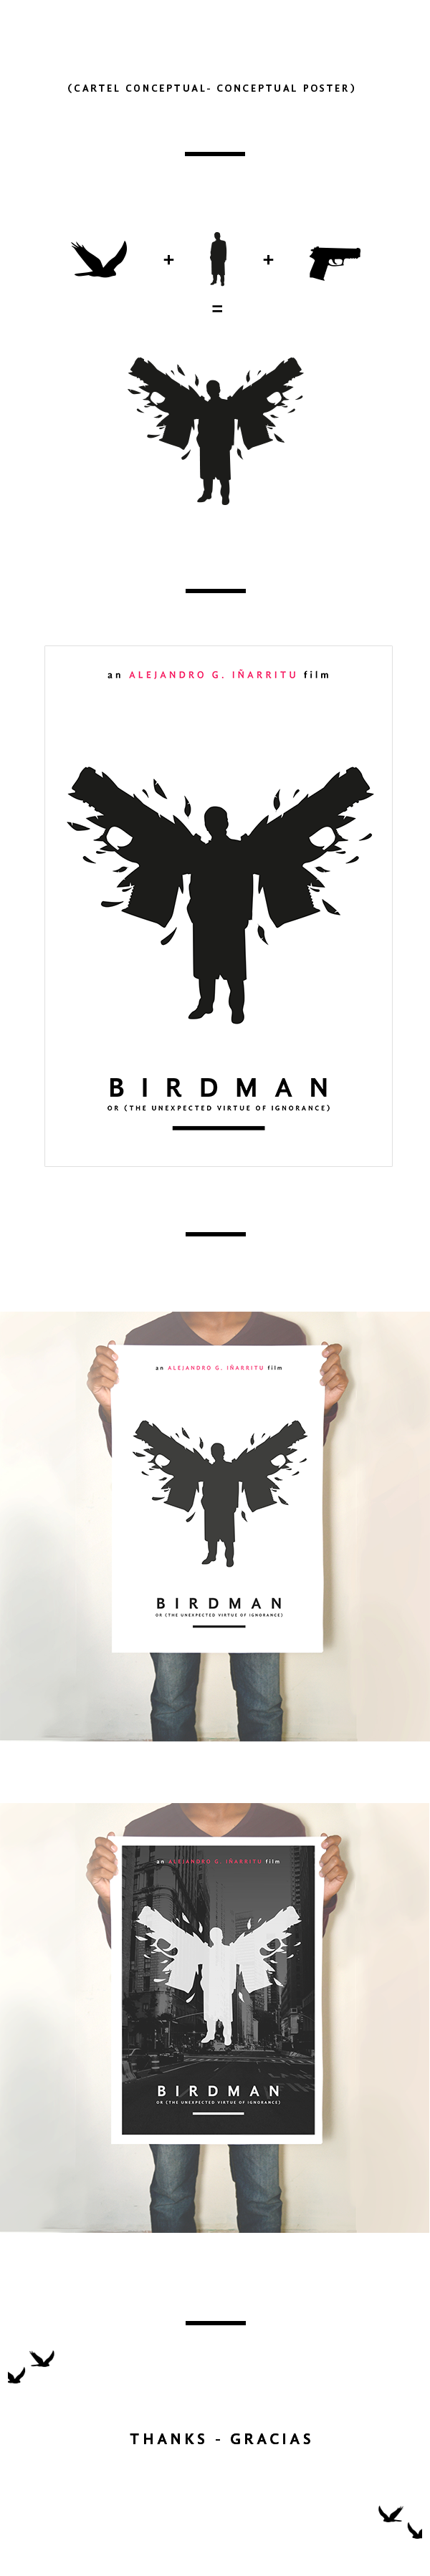 poster print movie iñarritu   keaton cine cartel impreso Cannes birdman